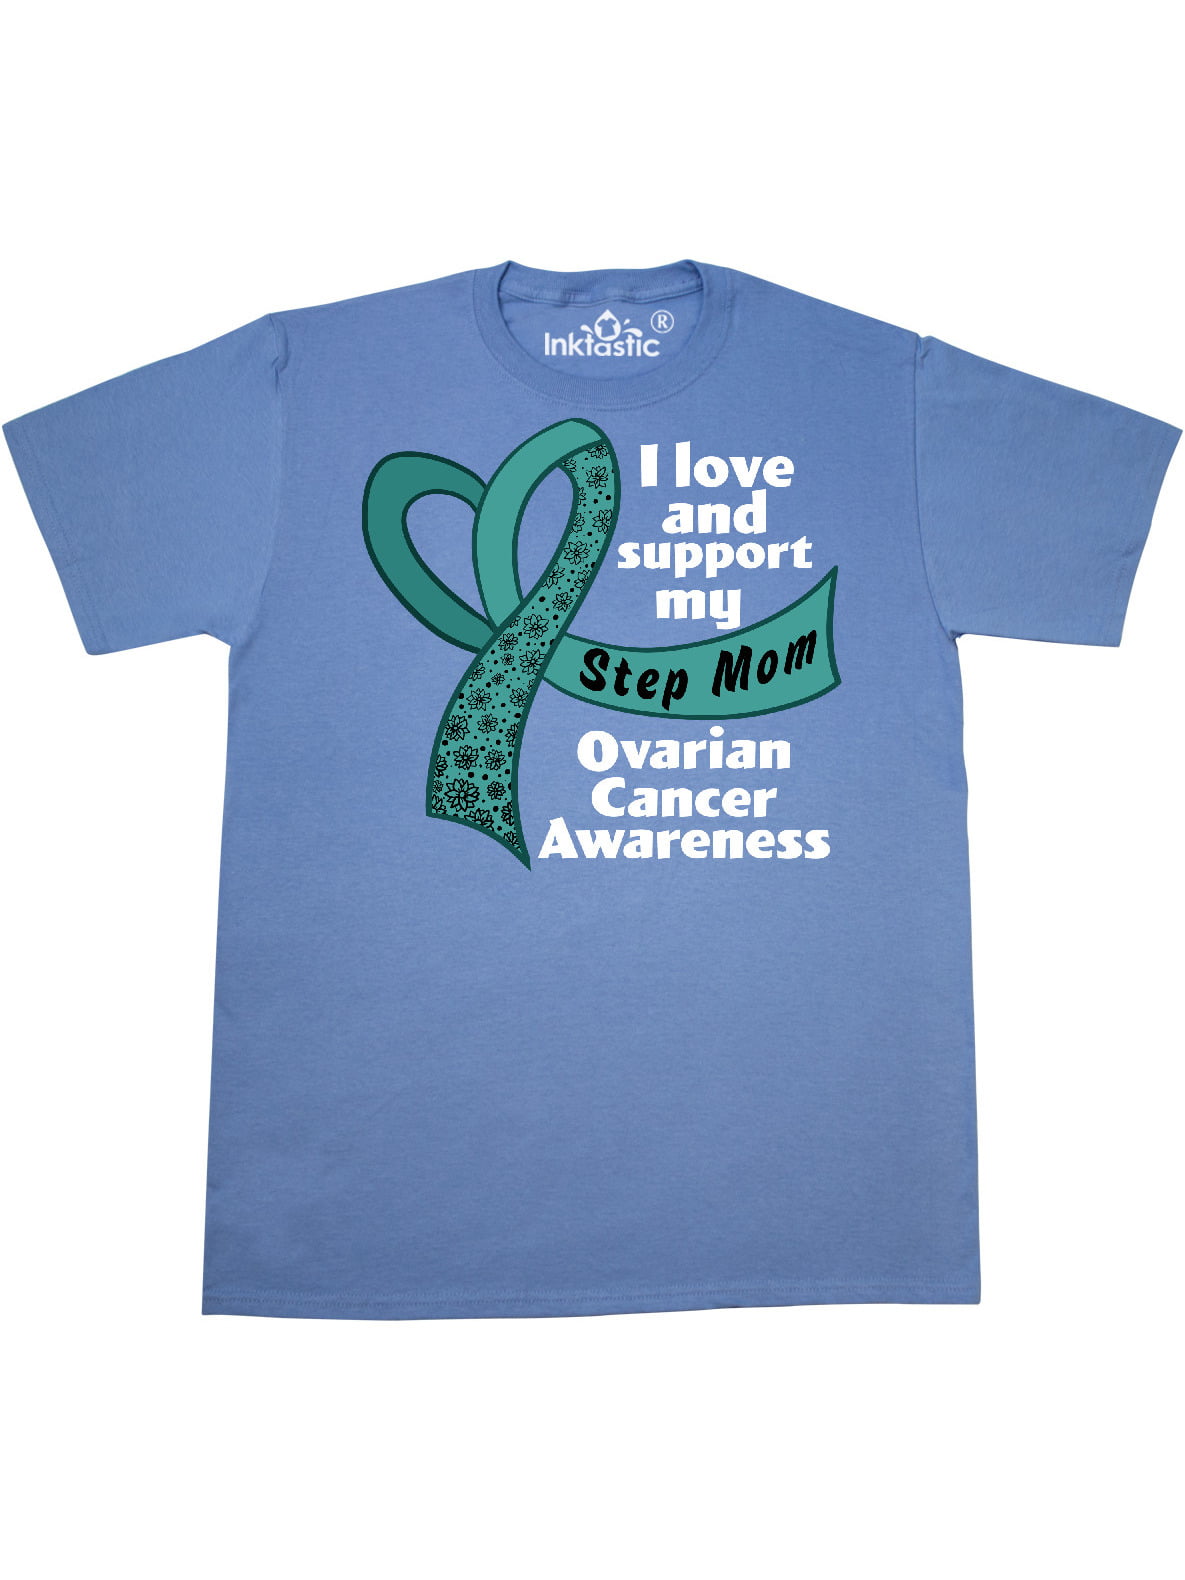 Love Mom Teal Ribbon Ovarian Cancer Awareness Short Sleeves Shirt Unisex Hoodie Sweatshirt For Mens Womens Ladies Kids.